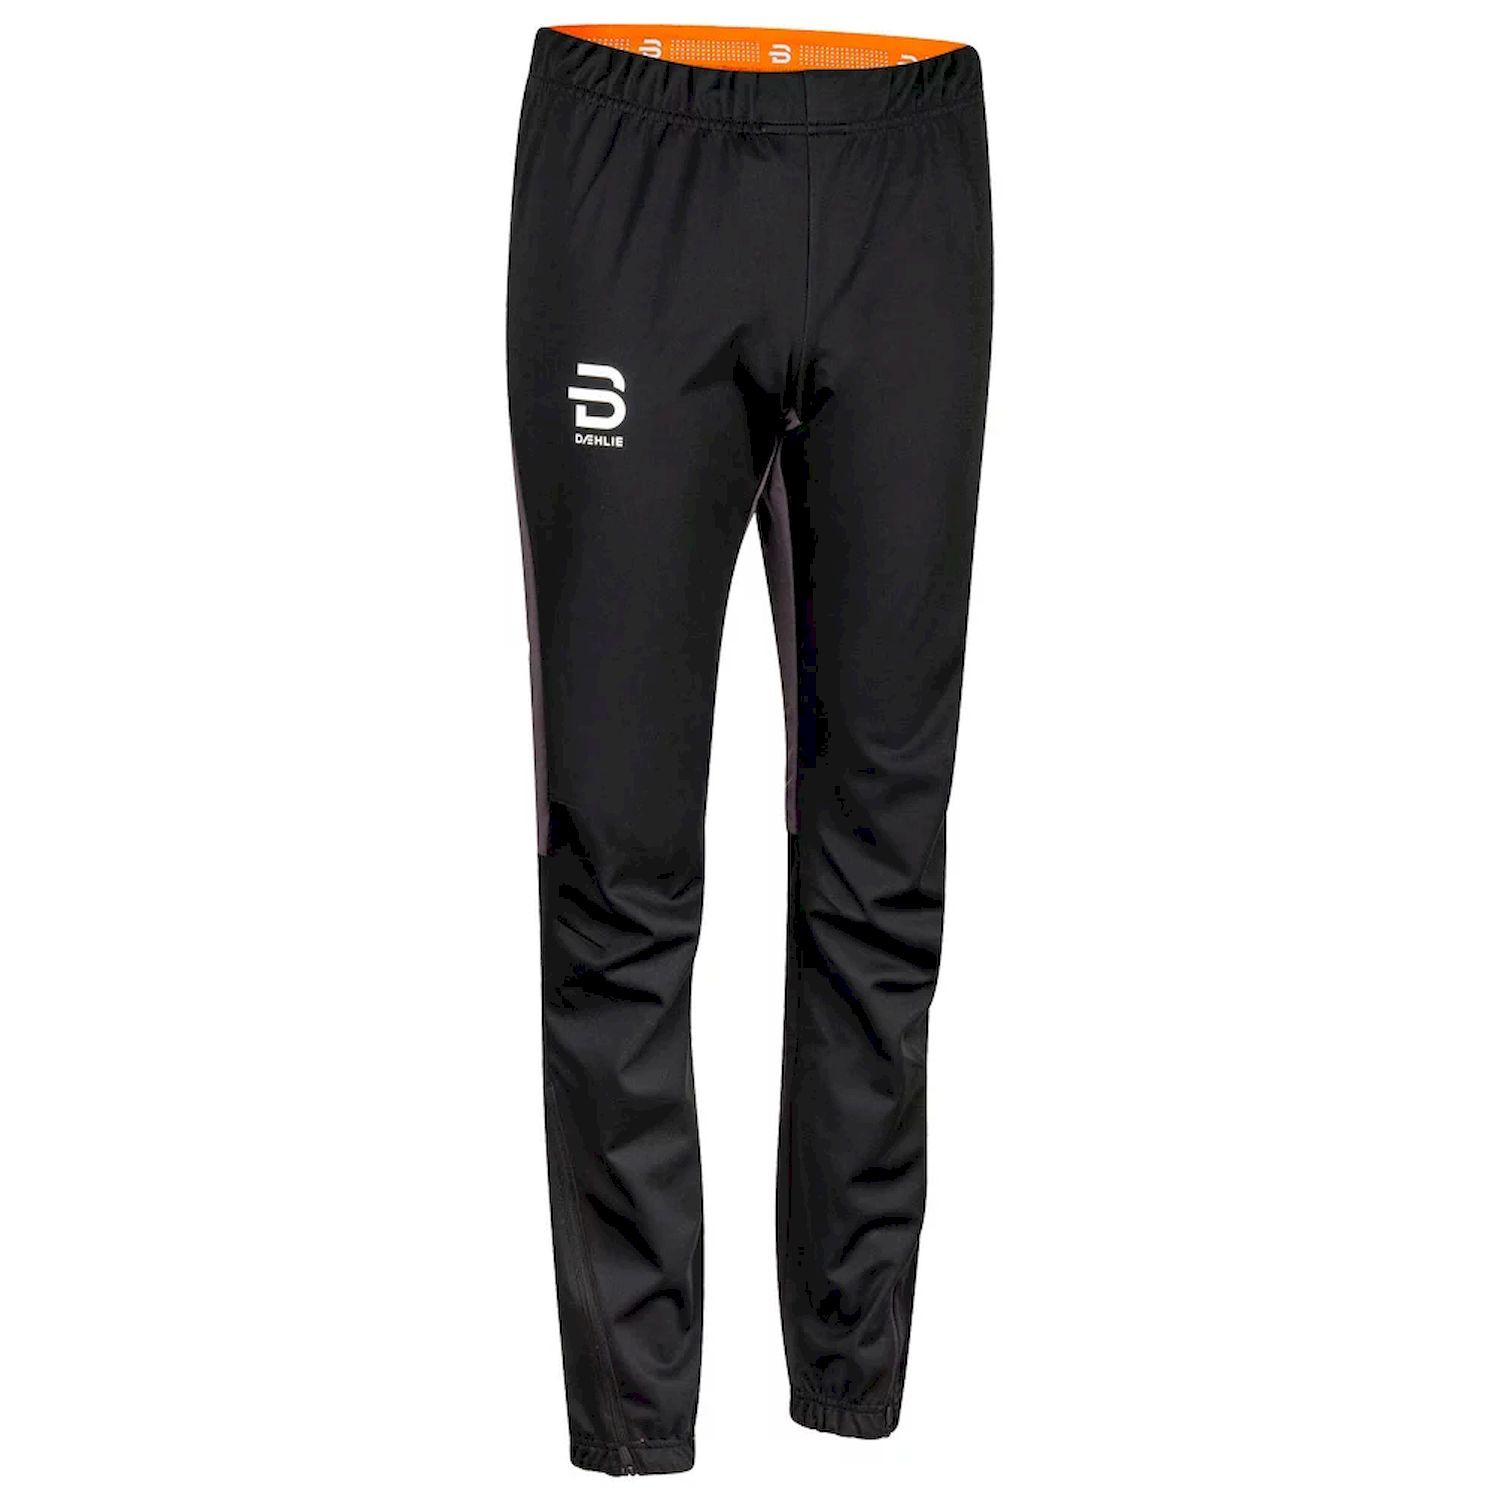 Daehlie Women's Pants Power - Cross-country ski trousers - Women's